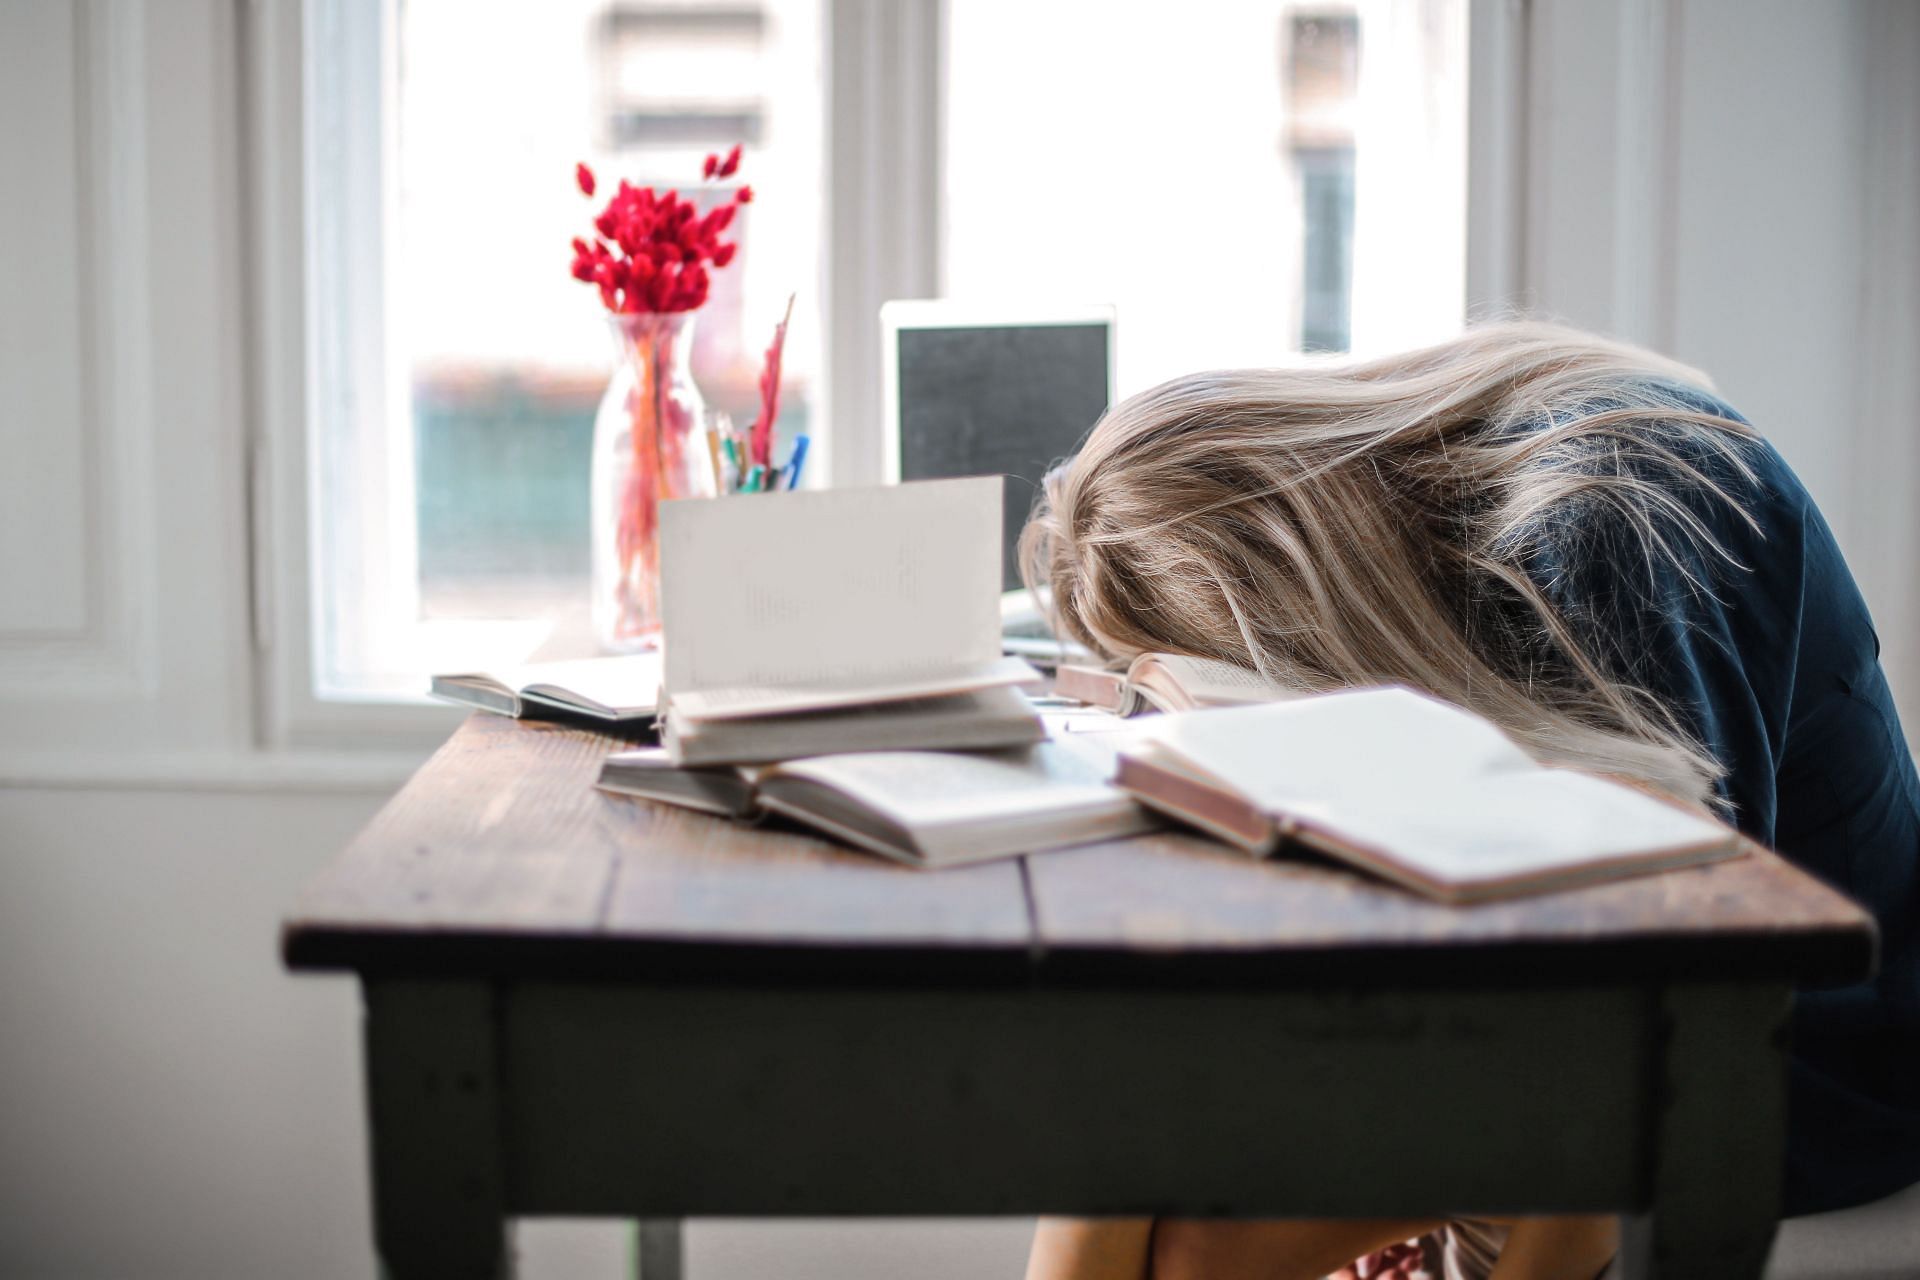 Drowsiness is one of the symptoms of sleep apnea (Image via Pexels/Andrea Piacquadio)